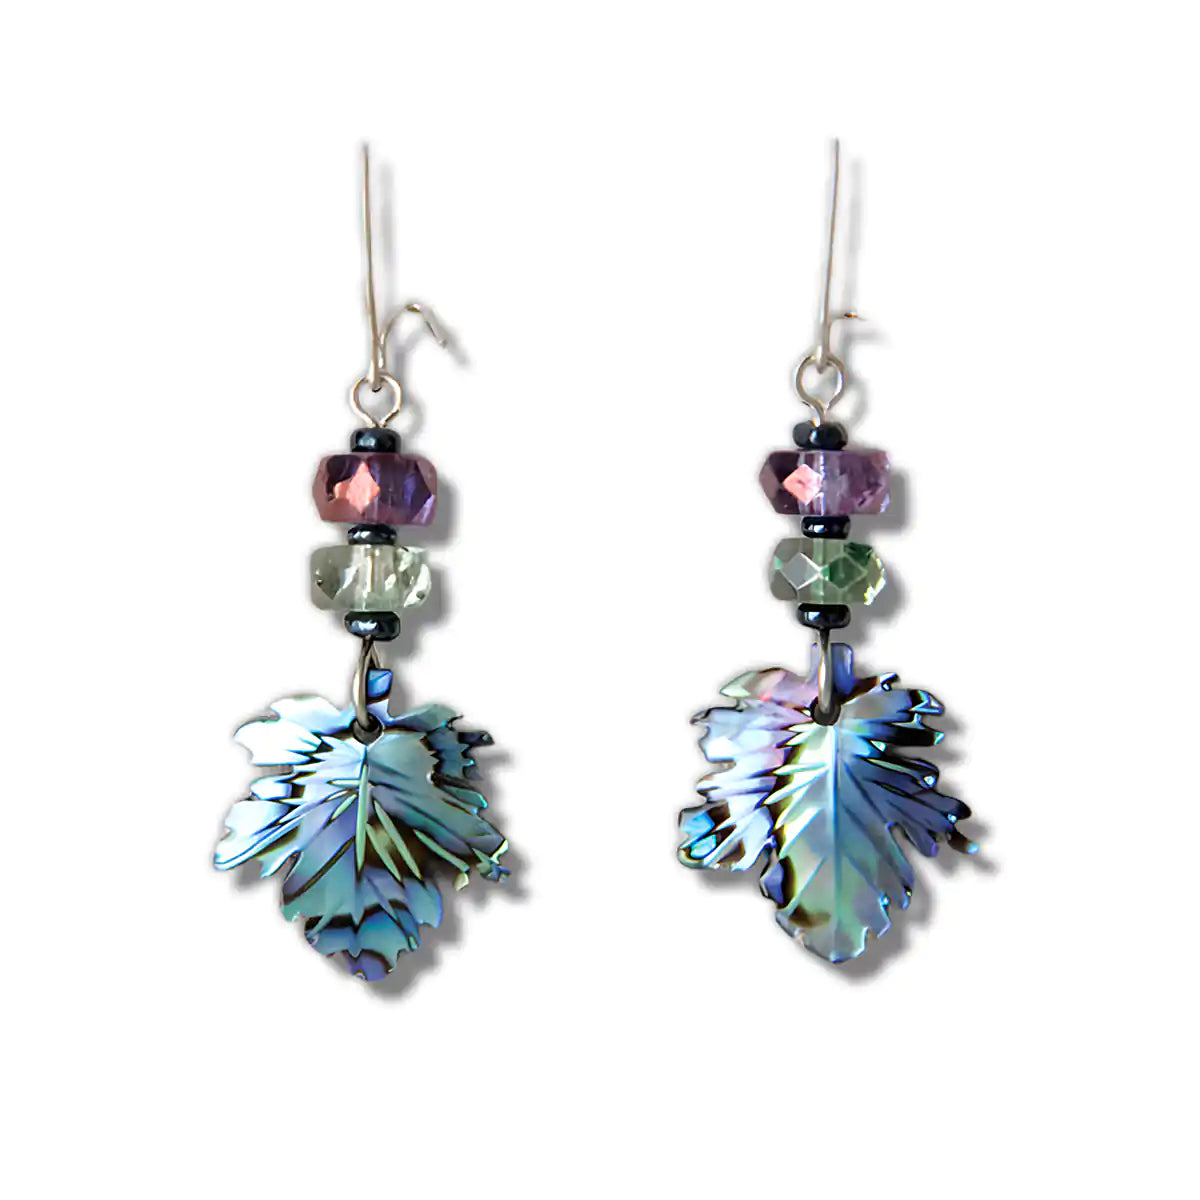 Glacier pearle maple leaf jewels earrings